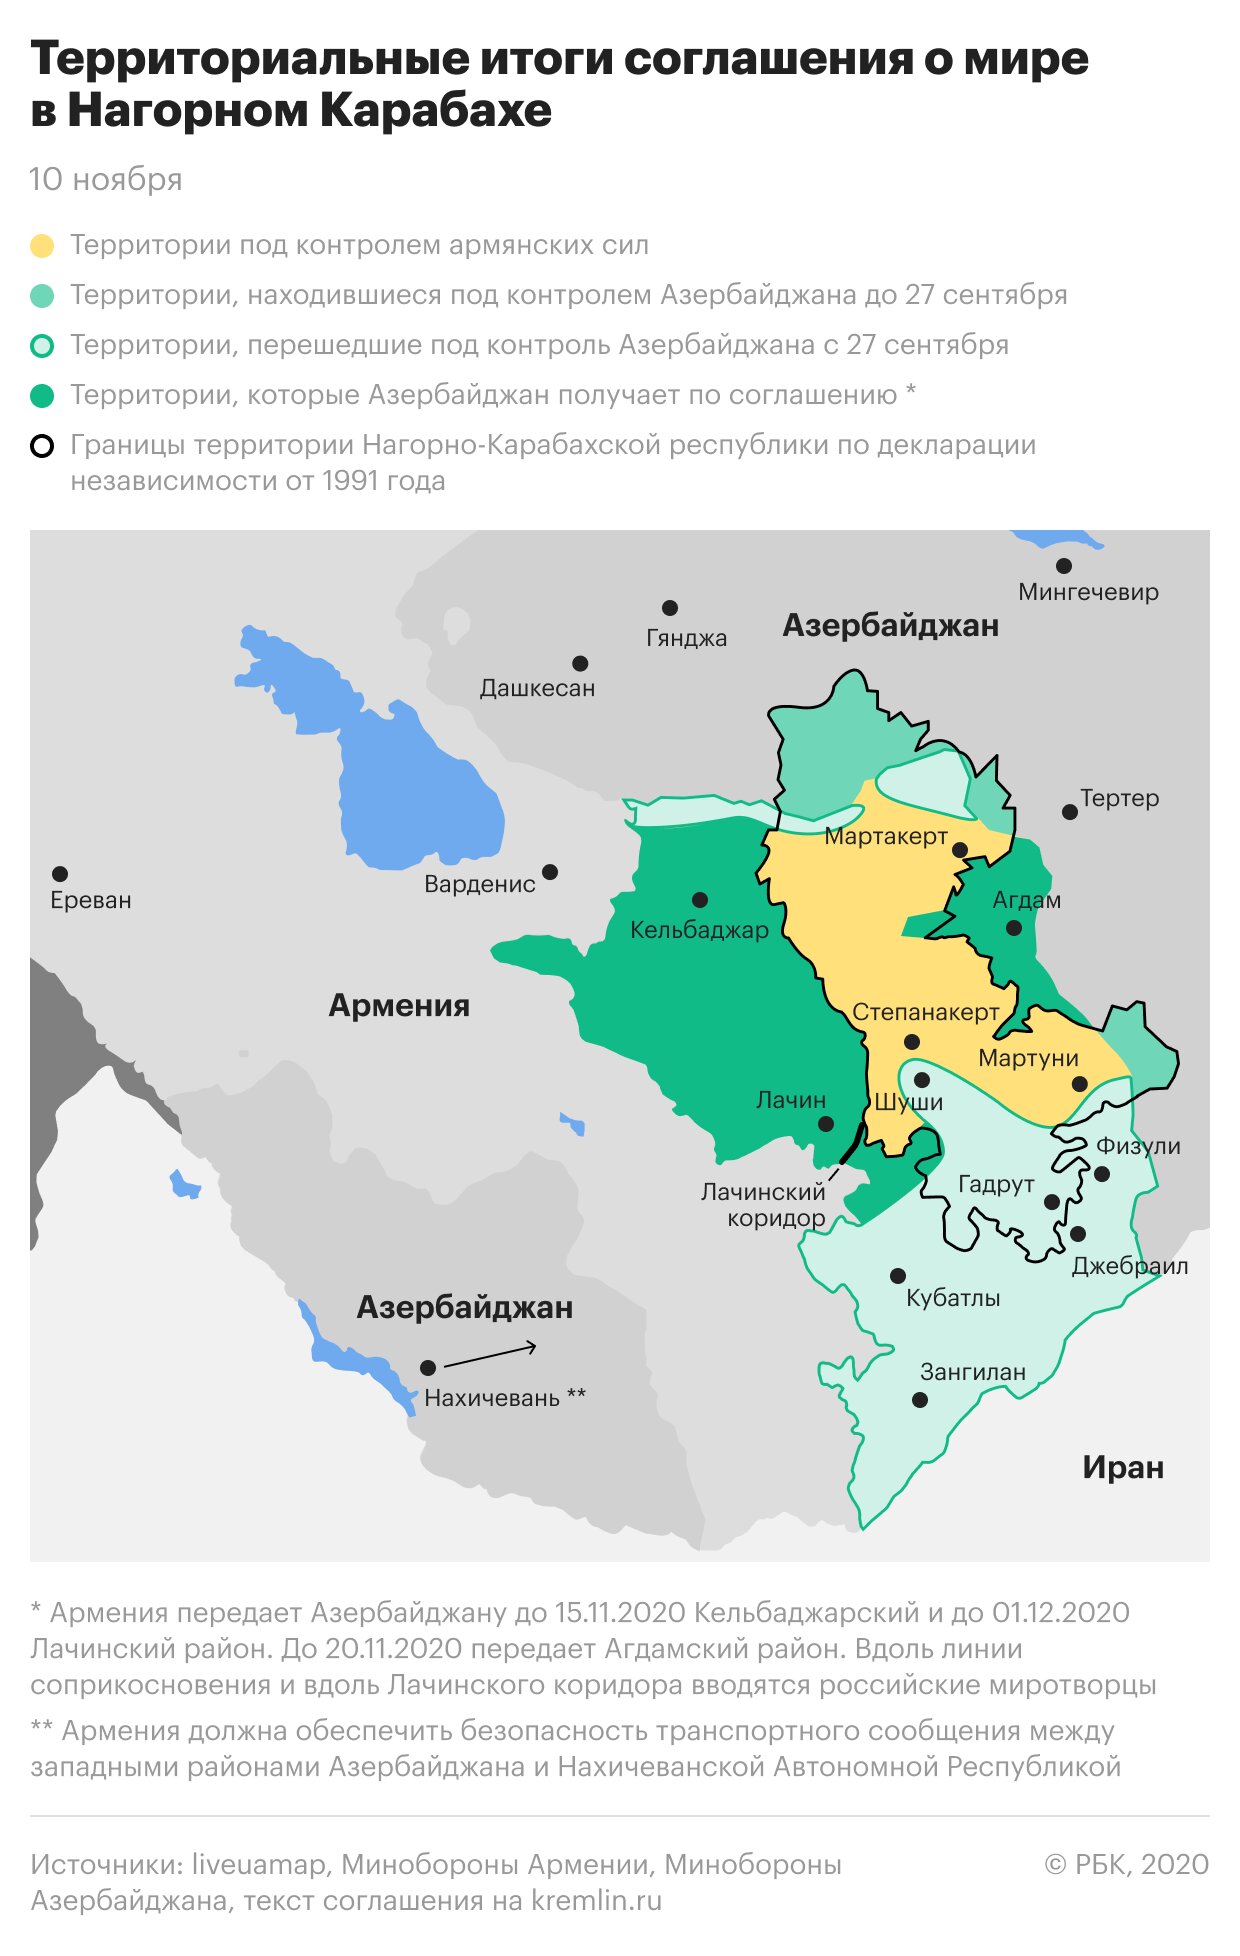 Обновленную карту Карабаха представили СМИ